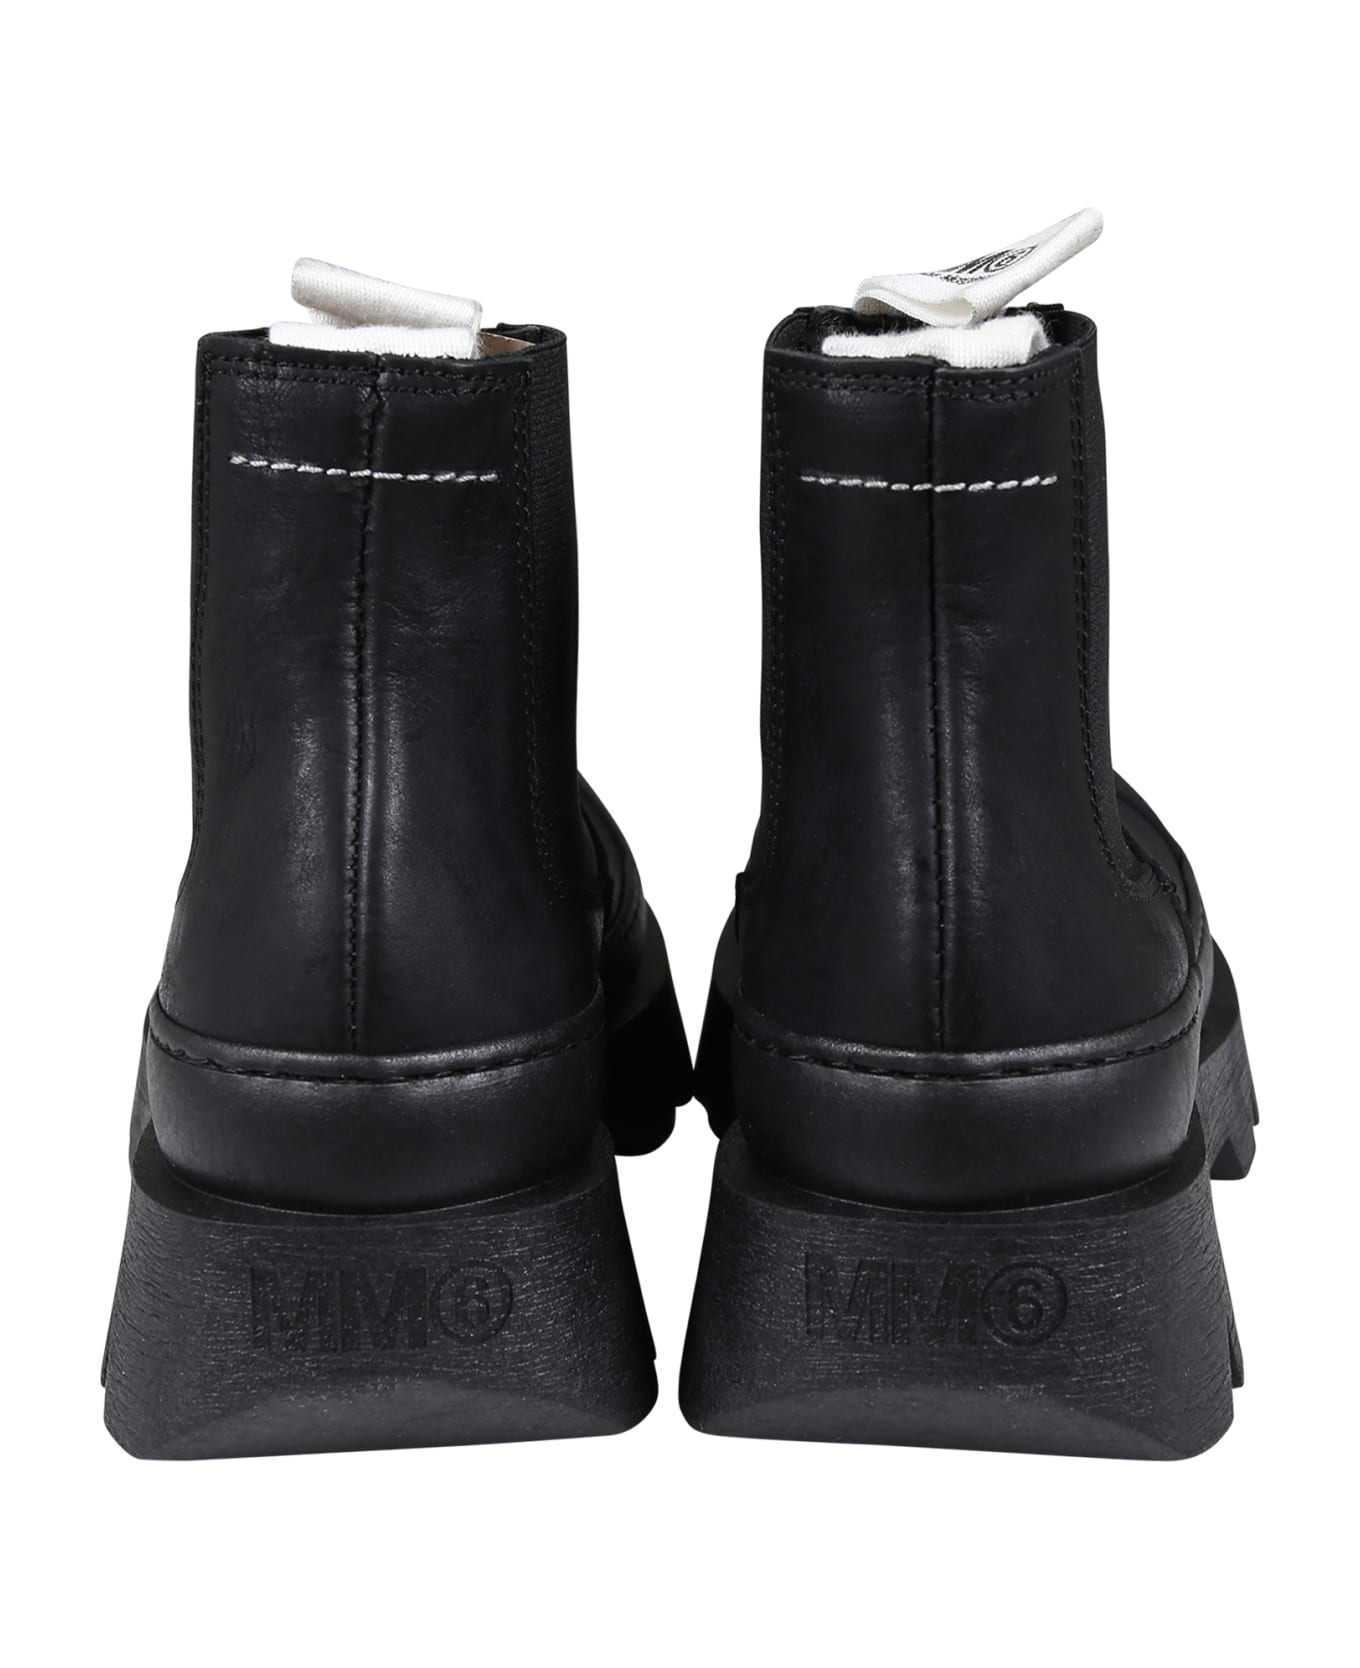 MM6 Maison Margiela Black Ankle Boots For Kids With Logo - Black